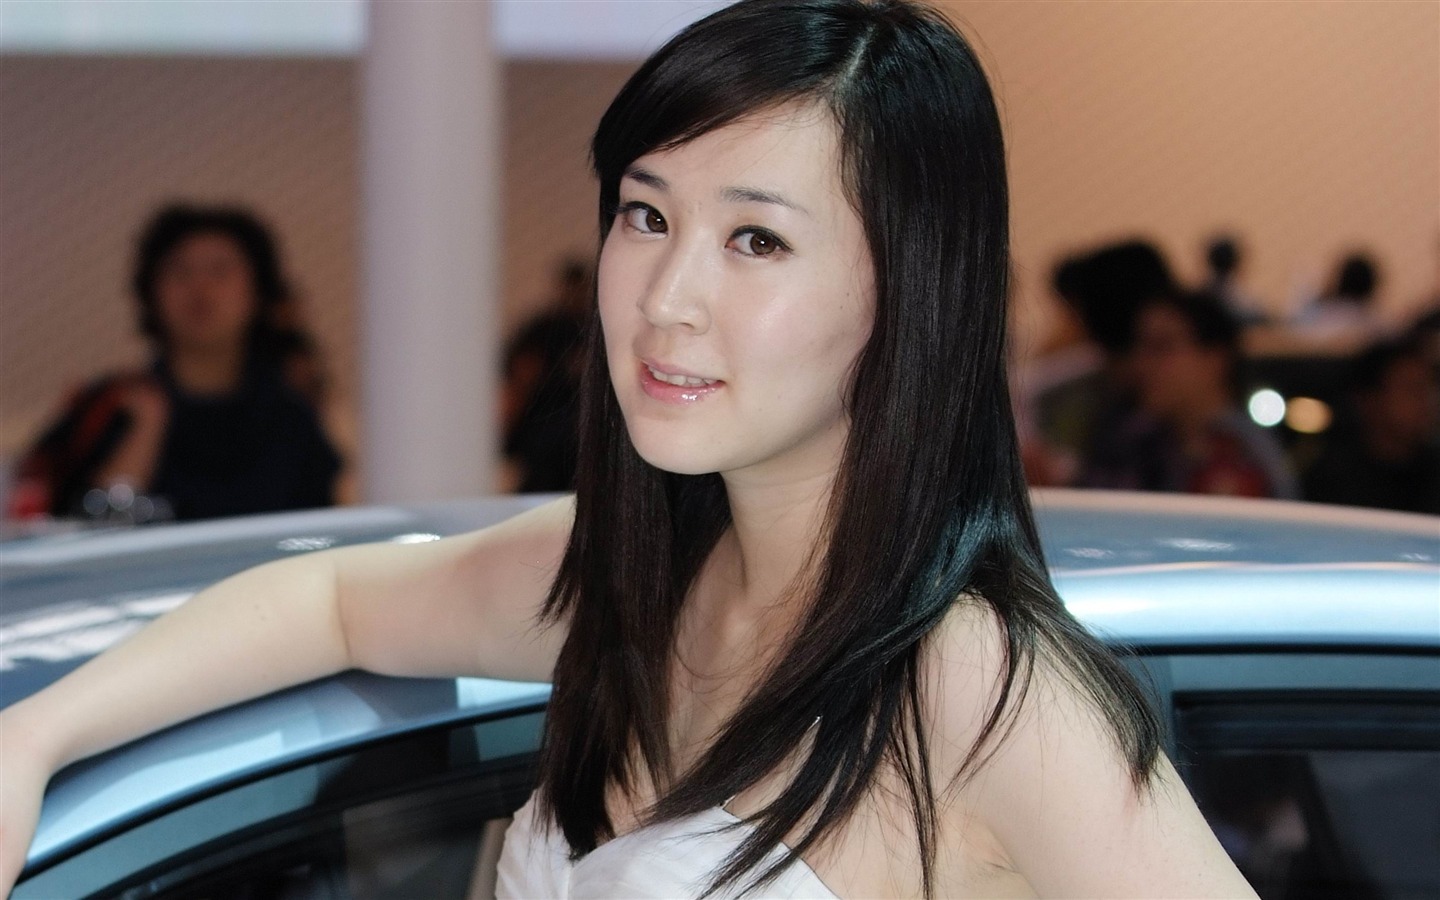 2010 Beijing International Auto Show beauty (rebar works) #5 - 1440x900